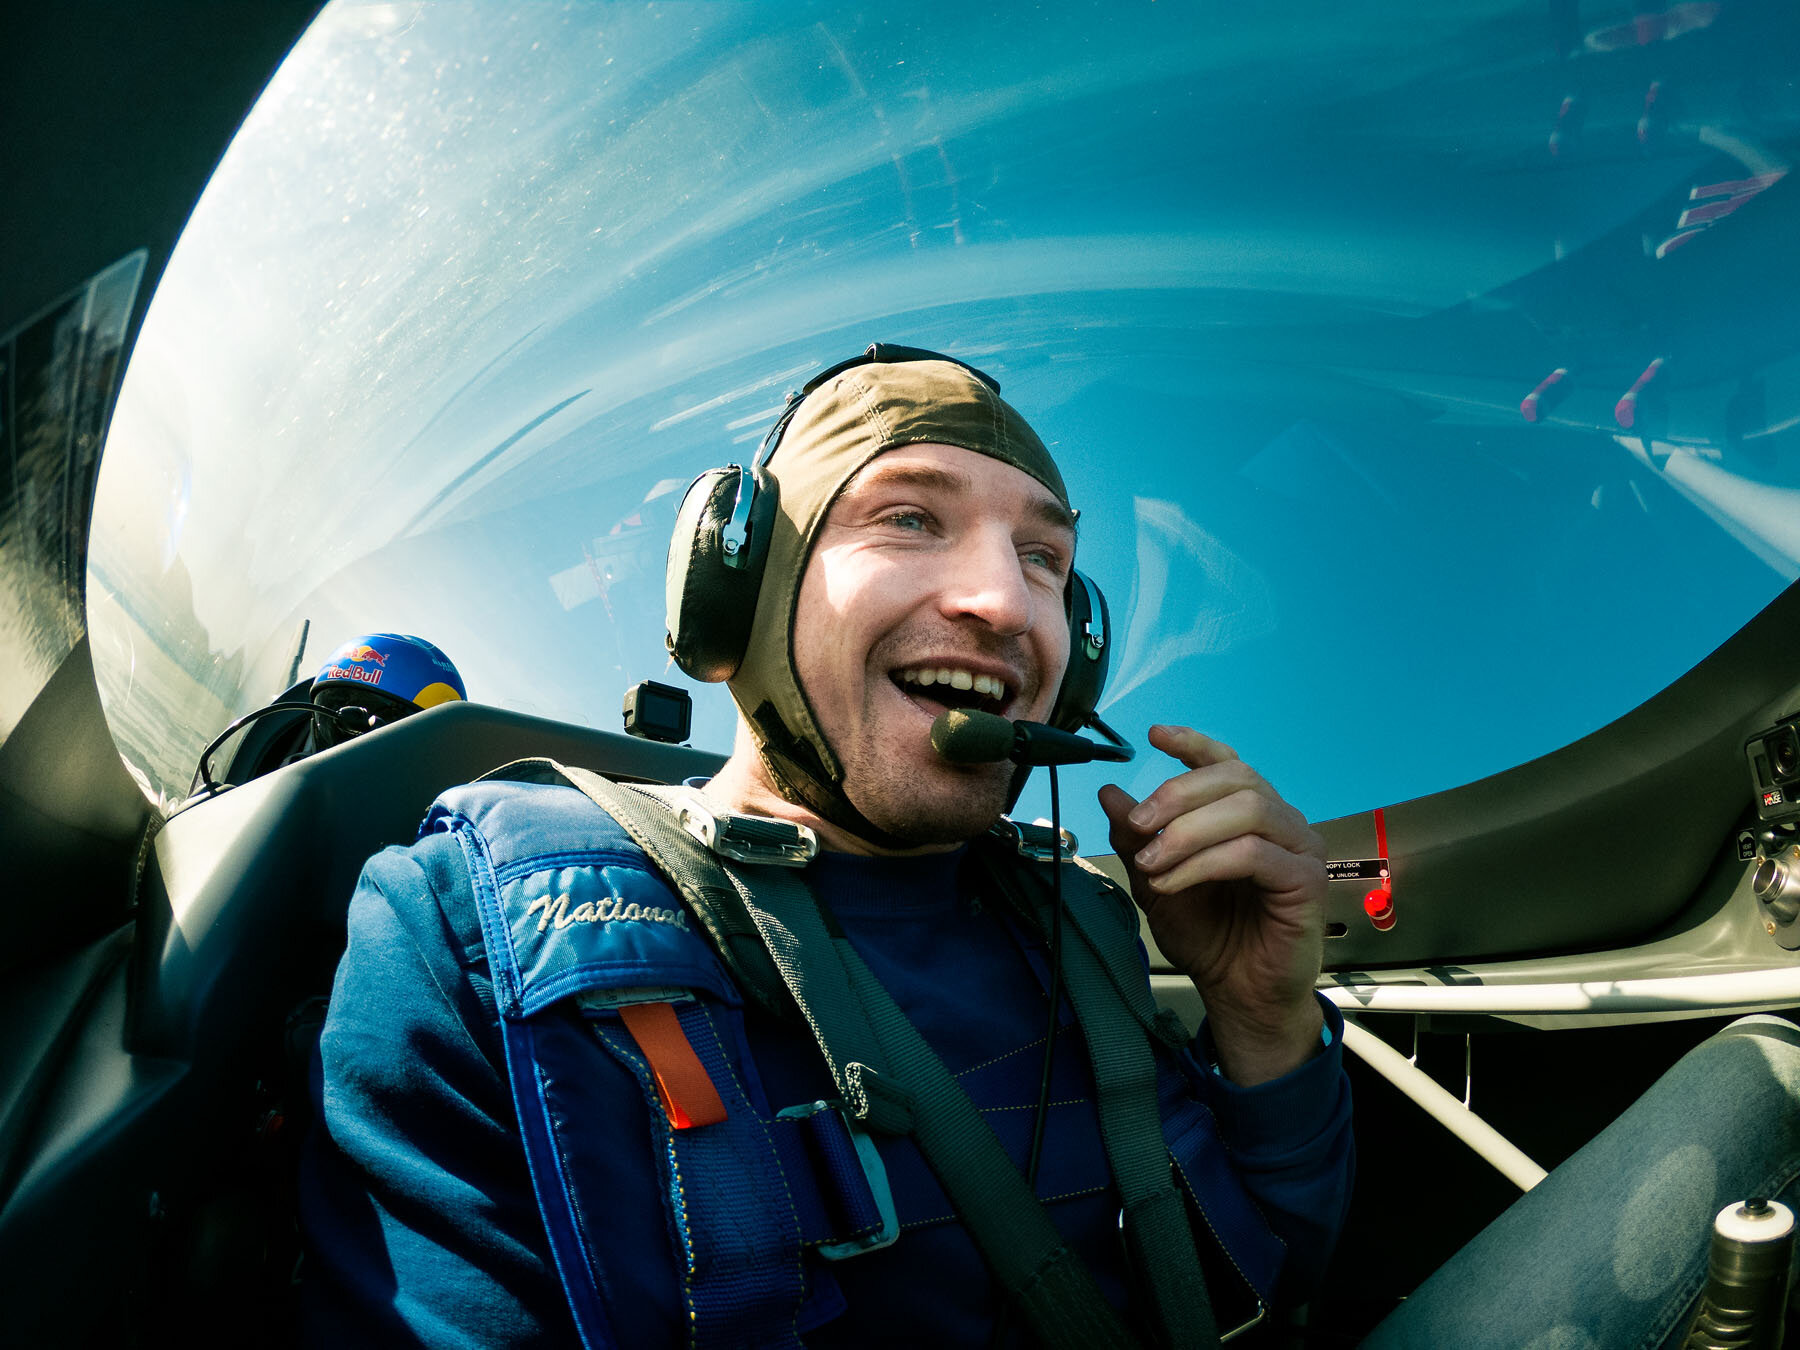  Beauden Barret is seen during his acrobatic tandem flight with pilot Dario Costa in Salzburg, Austria on November 29, 2018 